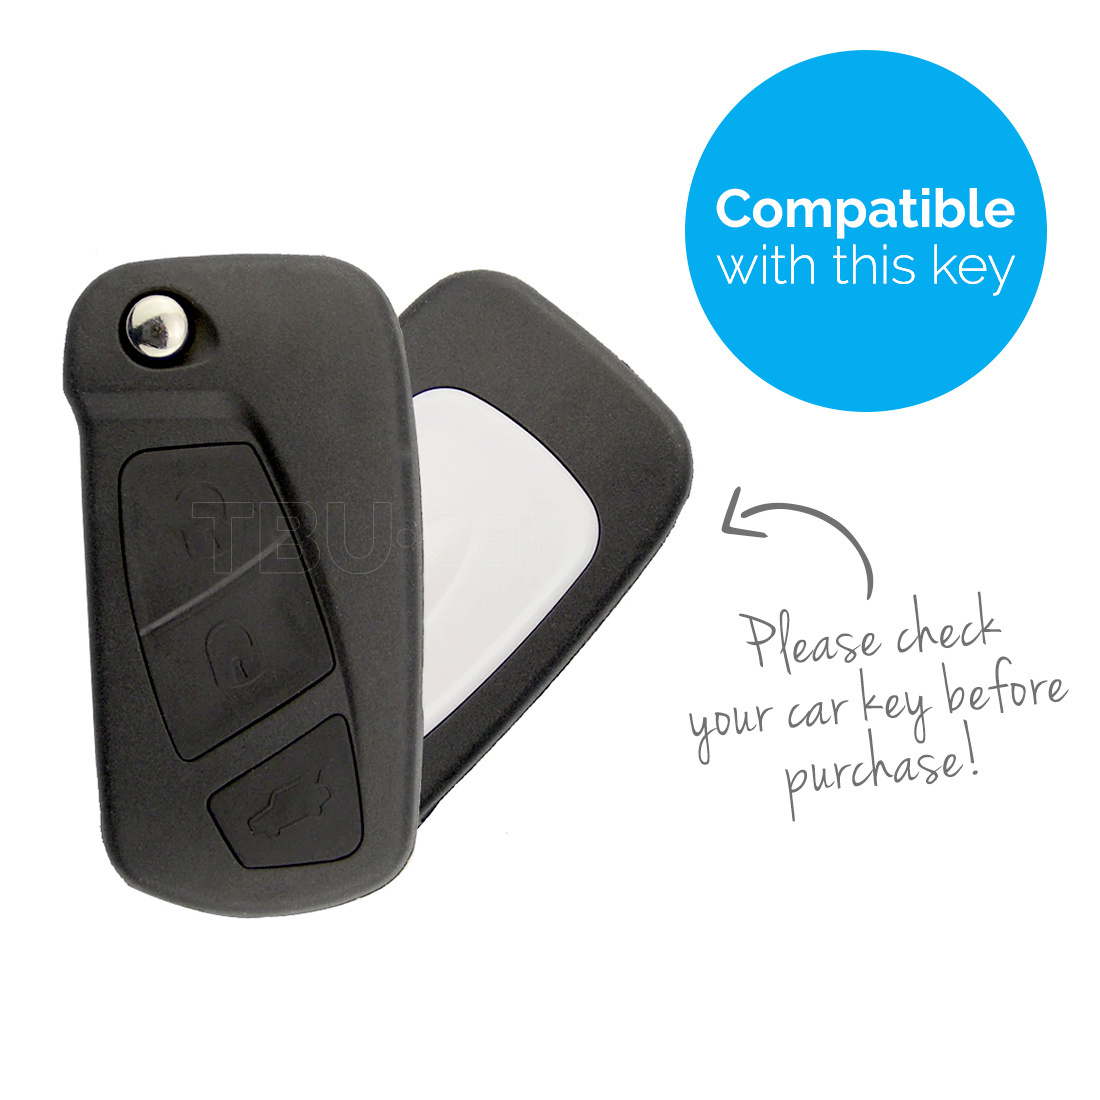 TBU car TBU car Autoschlüssel Hülle kompatibel mit Ford 3 Tasten (KA) - Schutzhülle aus Silikon - Auto Schlüsselhülle Cover in Schwarz